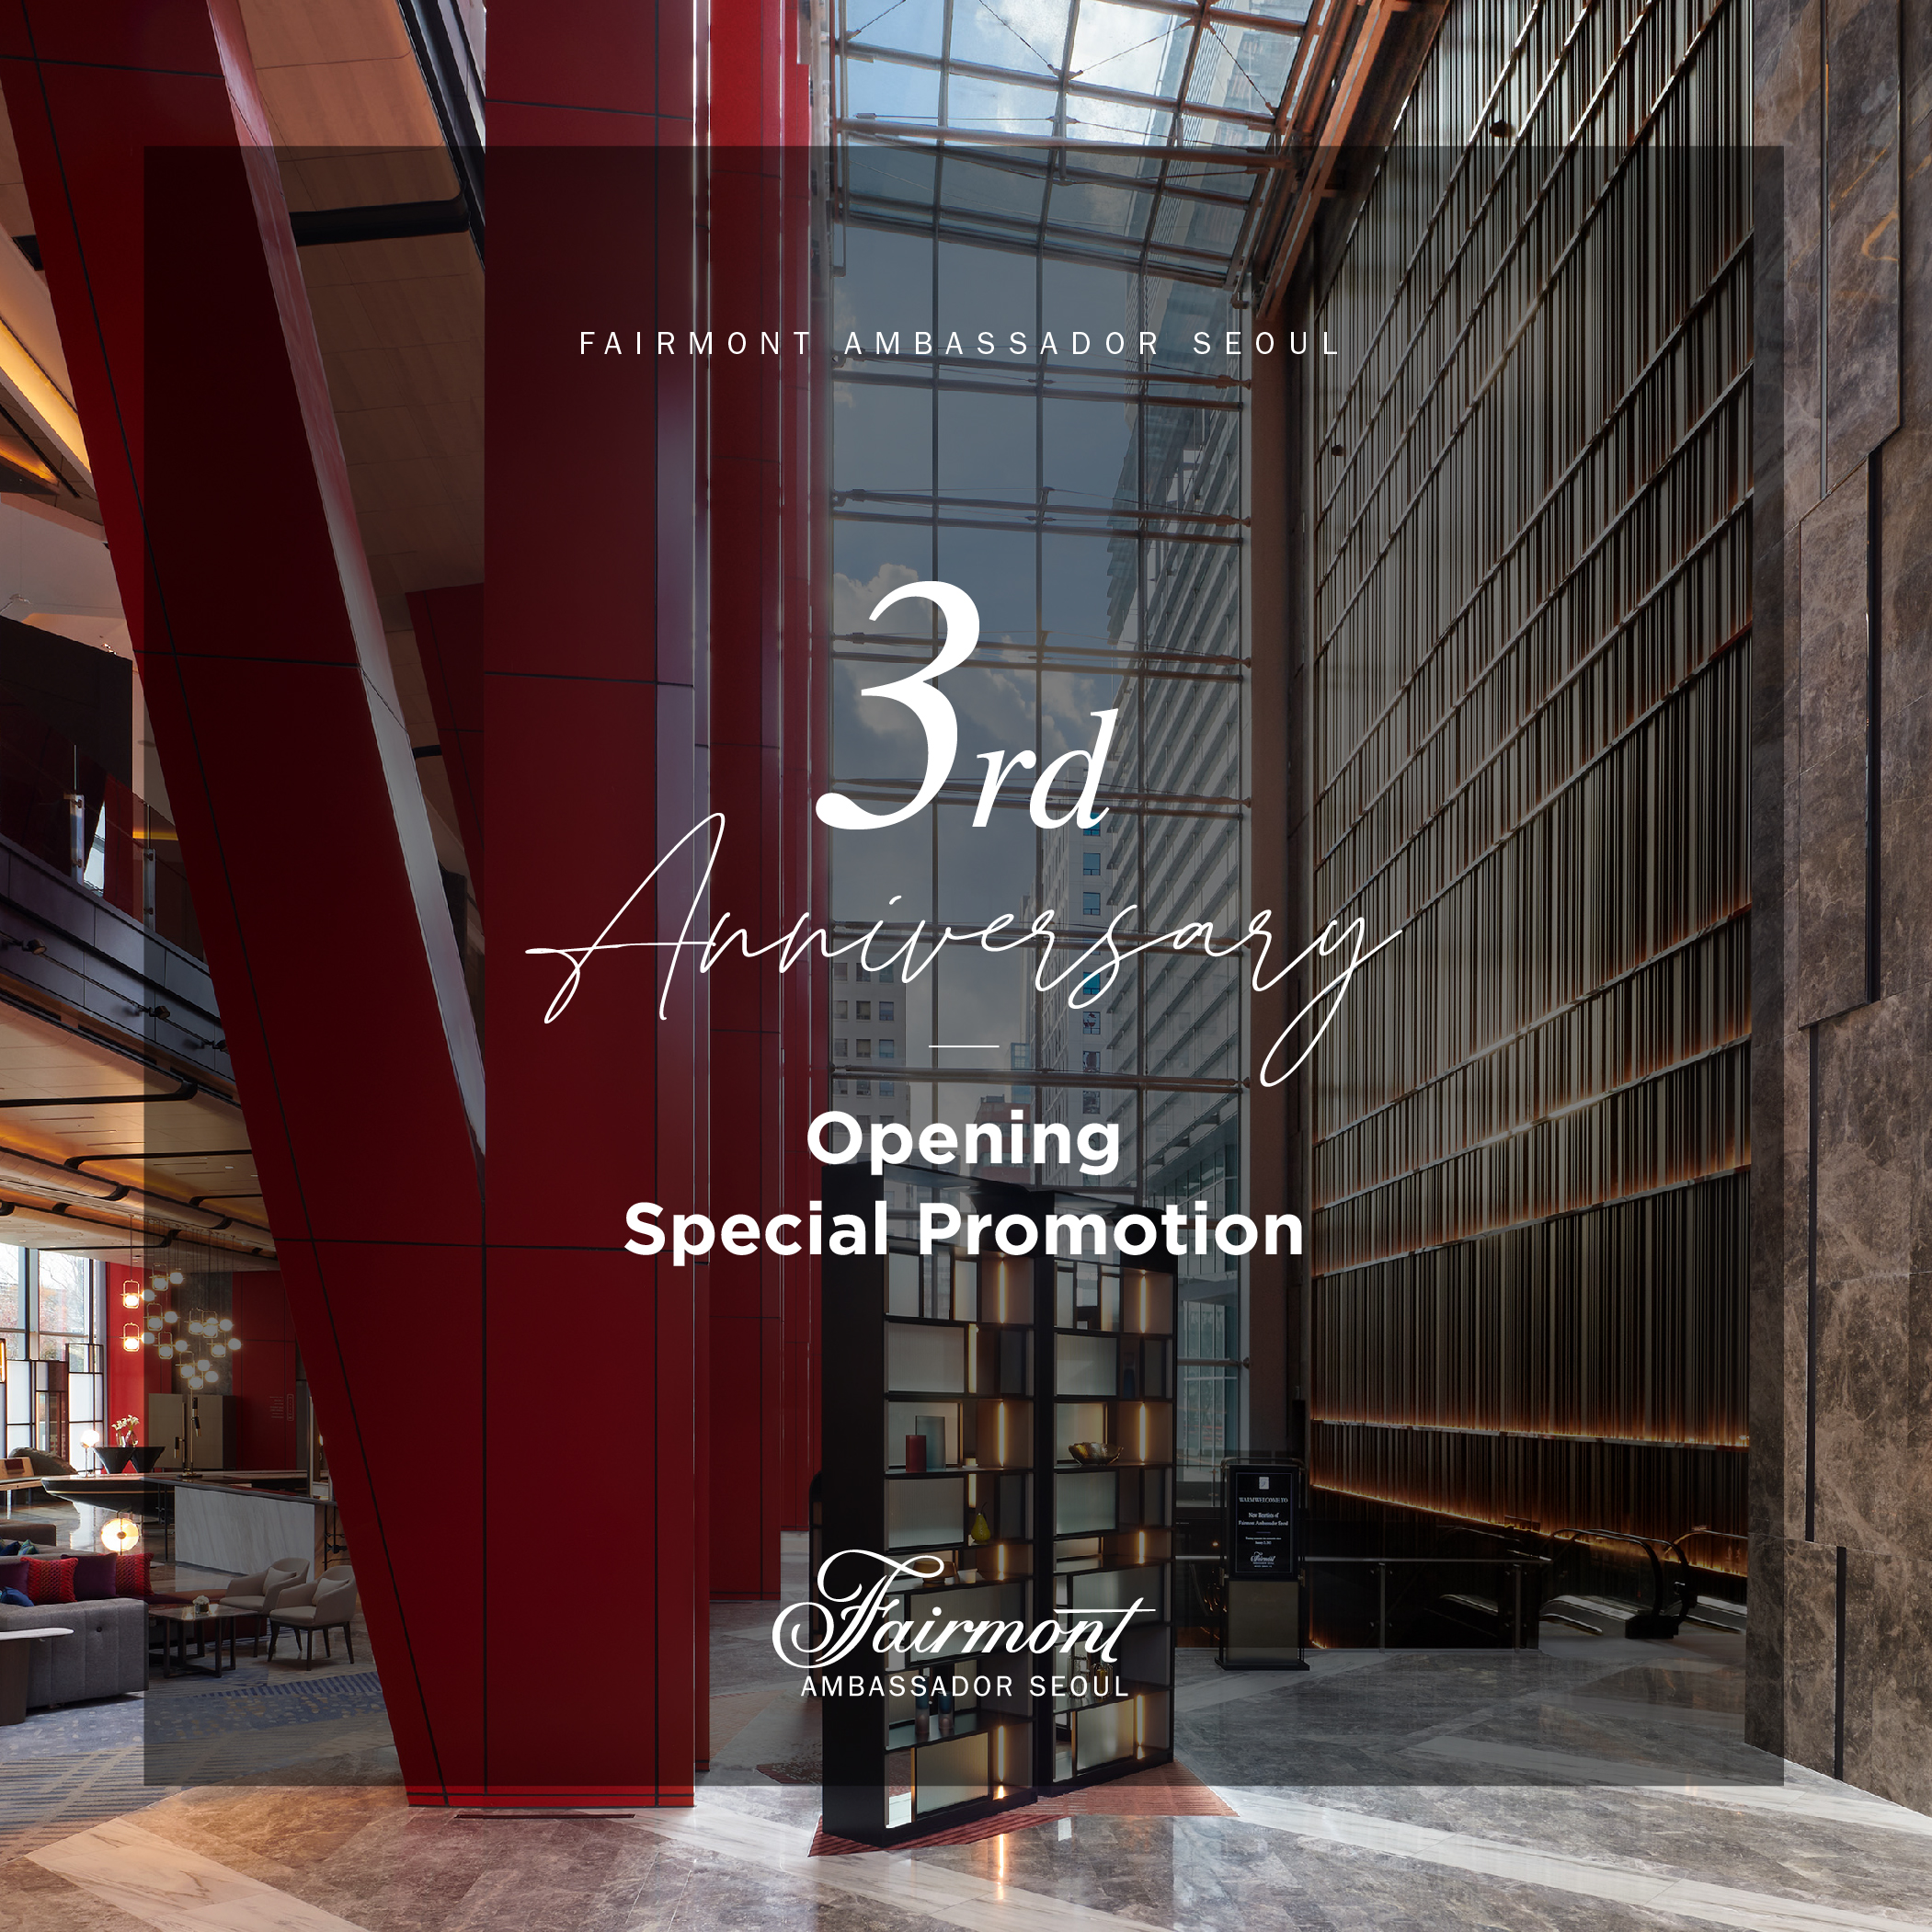 Fairmont Ambassador Seoul 3rd Anniversary, Special Promotion